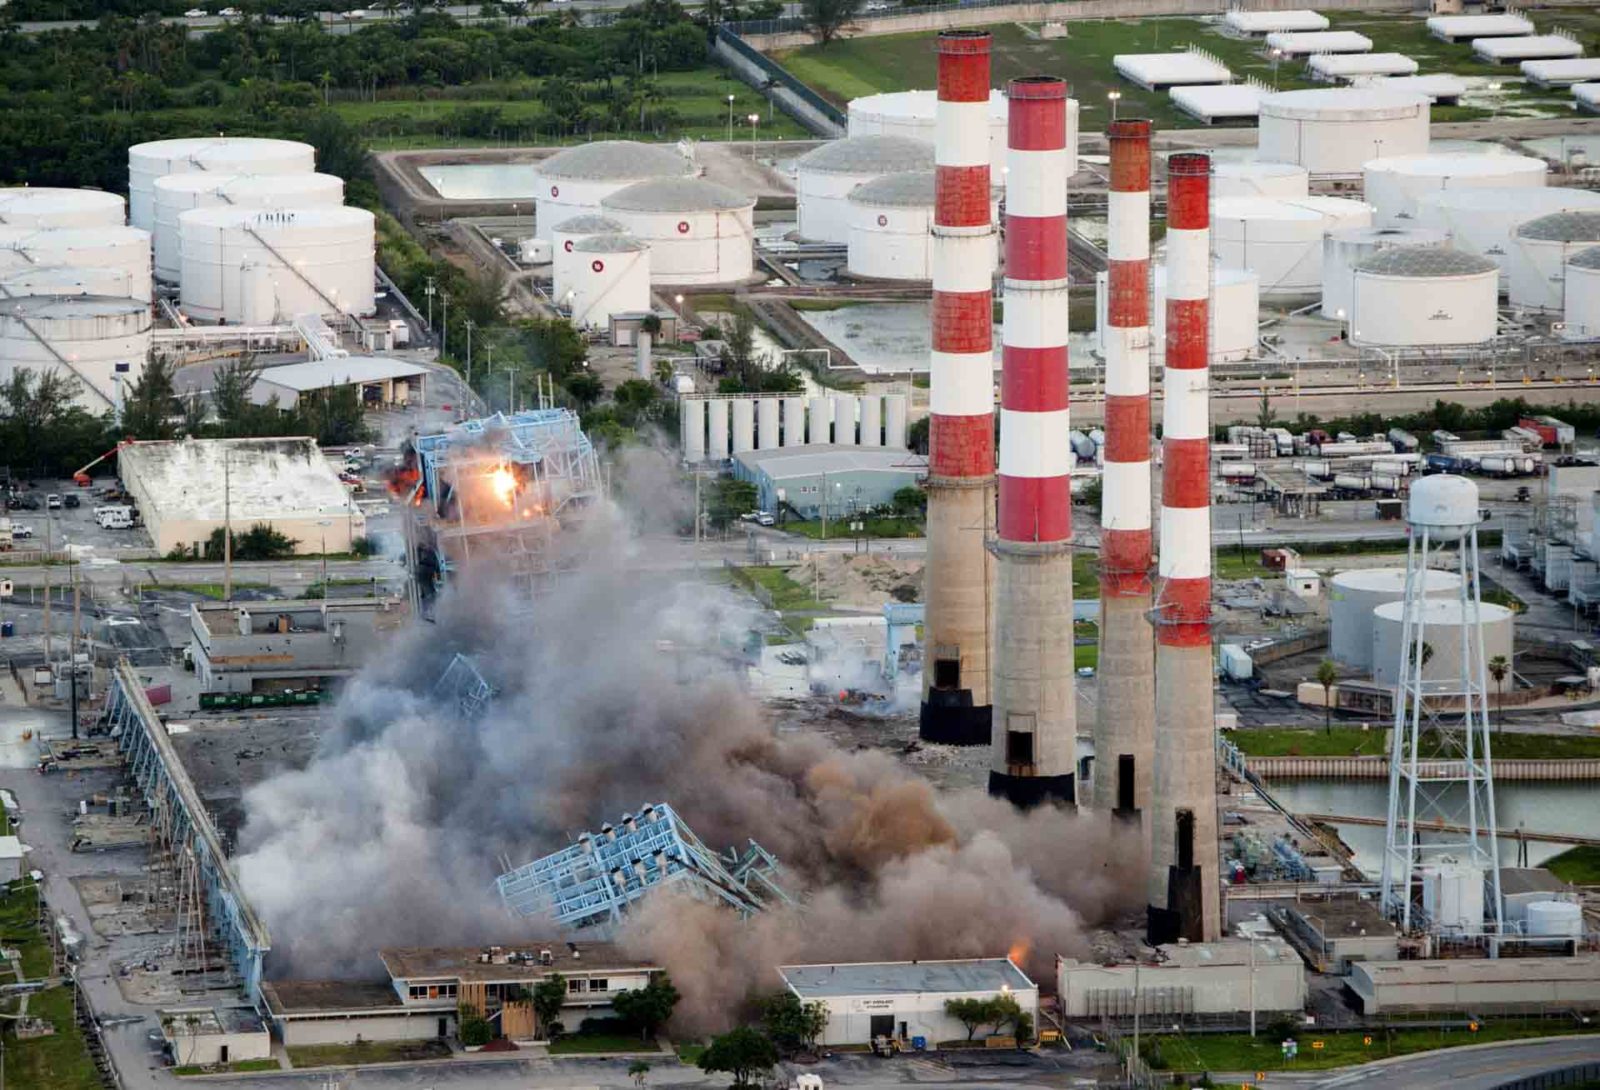 Florida Big Bend Power Plant Explosion | Undefeated Power Plant Explosion Lawyer3489 x 2376